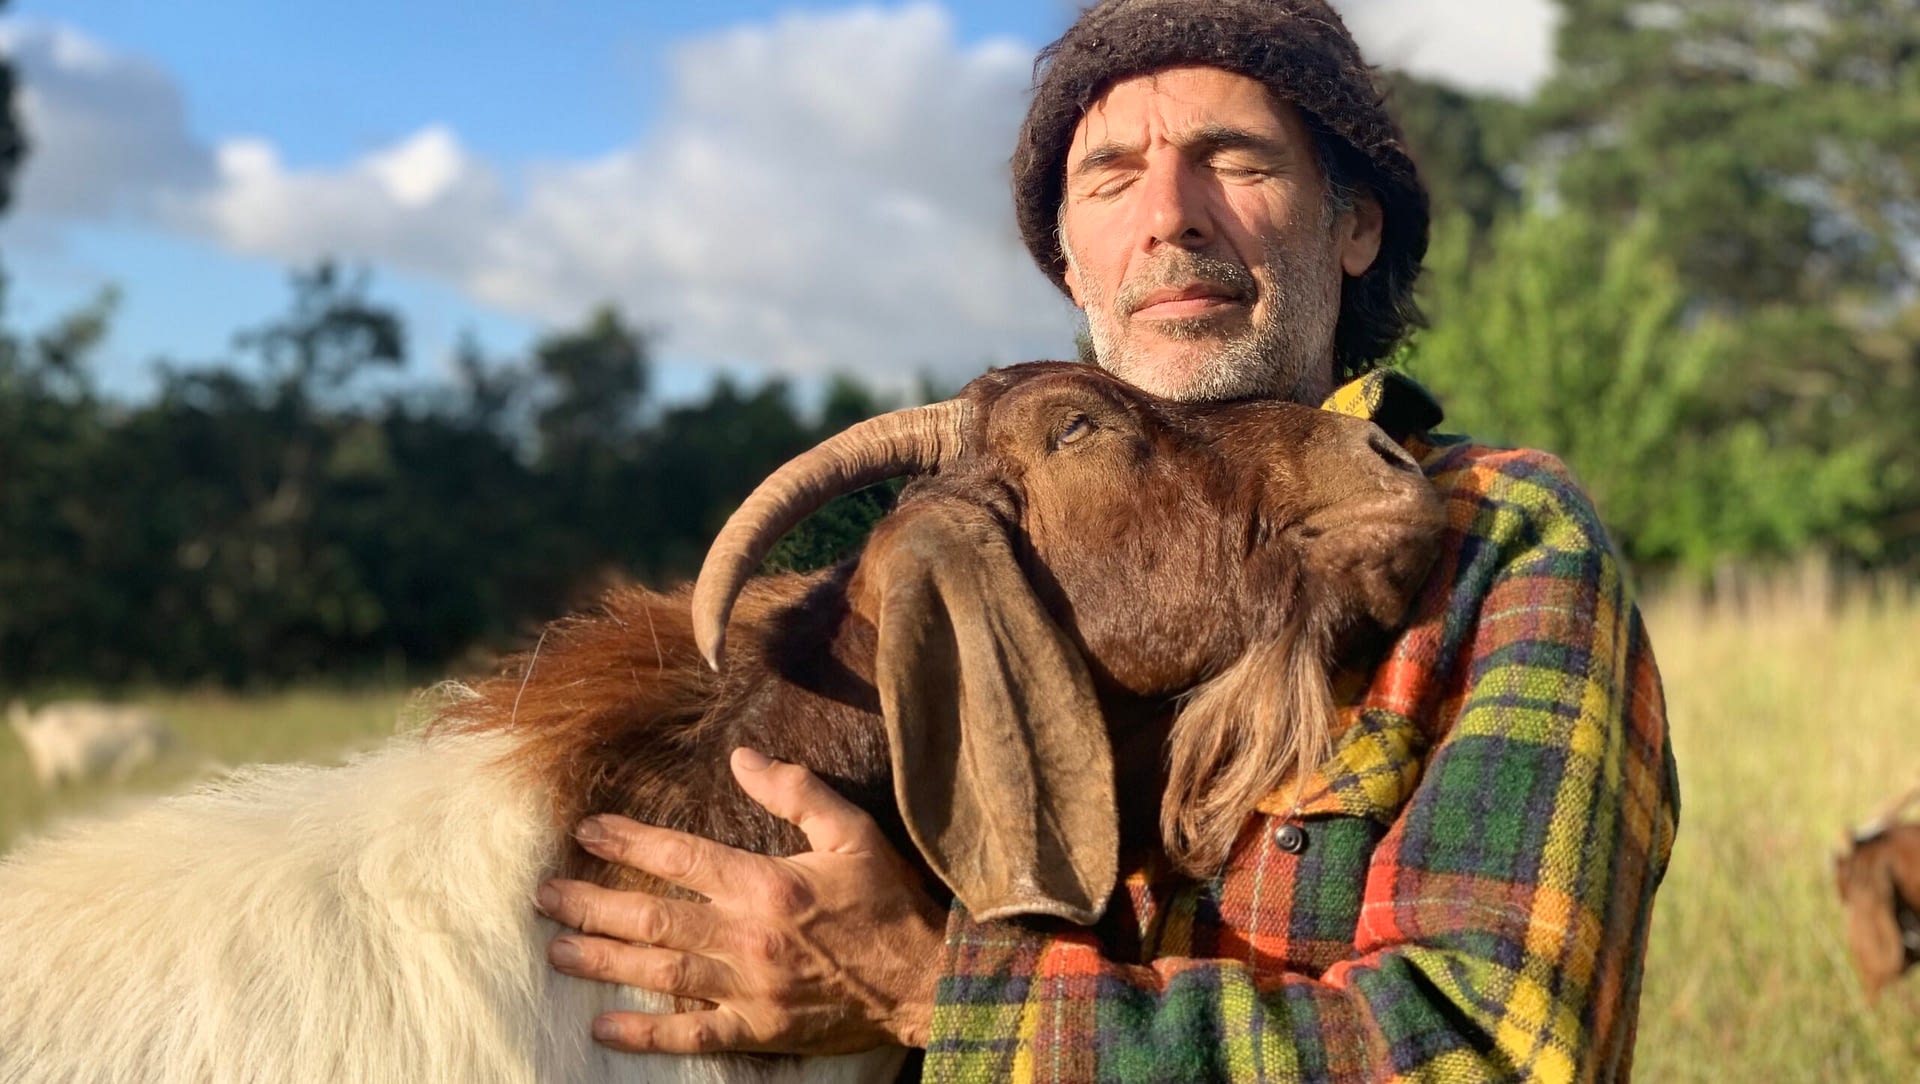 Image: Person hugging goat